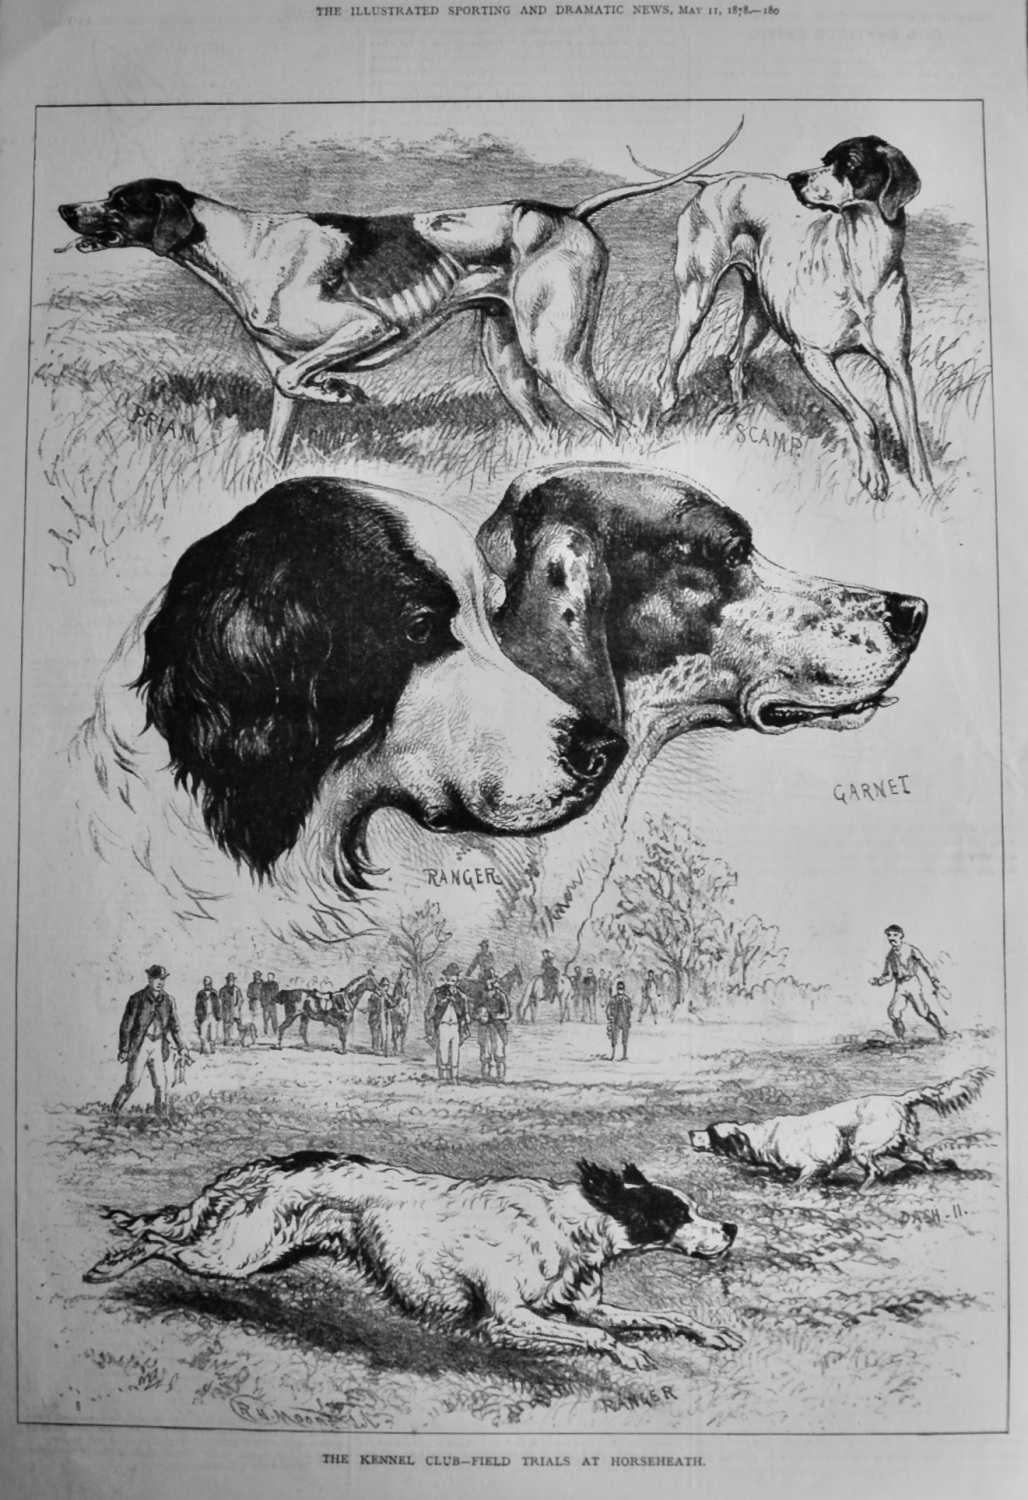 The Kennel Club - Field Trials at Horseheath. 1878.